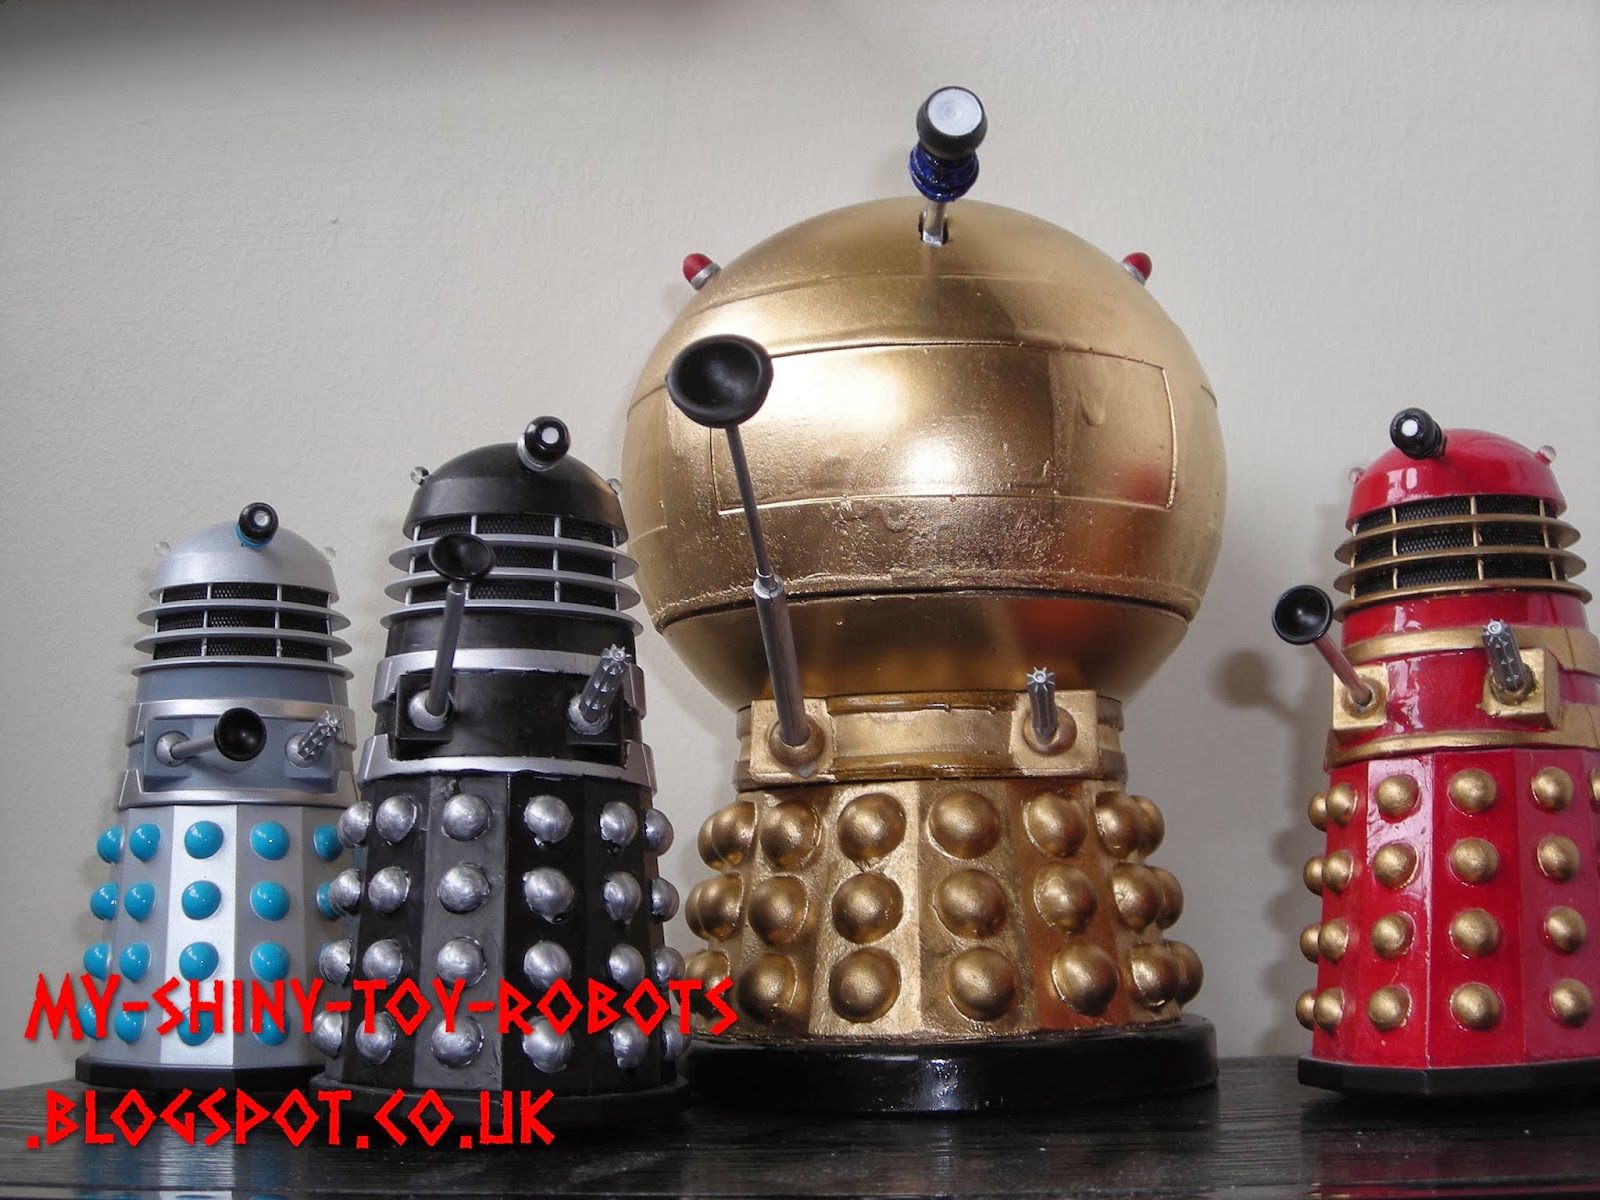 The comic Dalek army grows